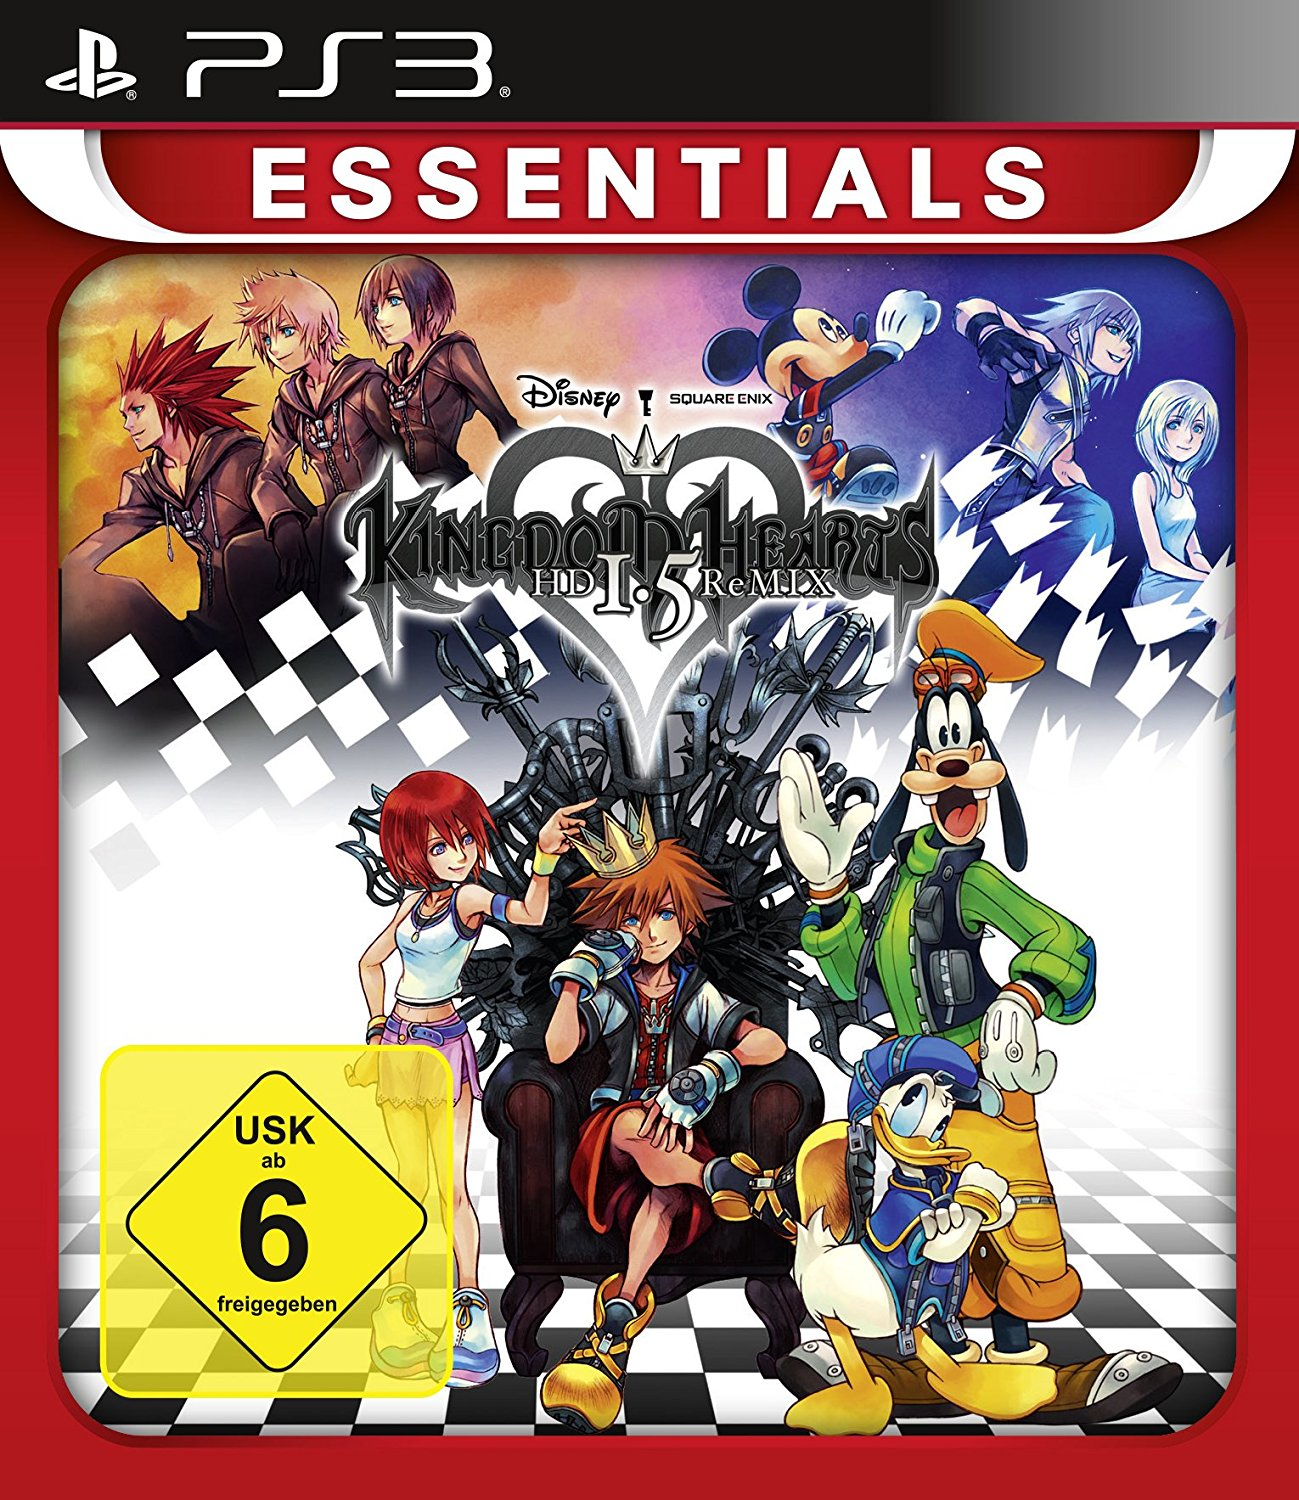 Kingdom Hearts - 3] HD 1.5 [PlayStation ReMIX Disney